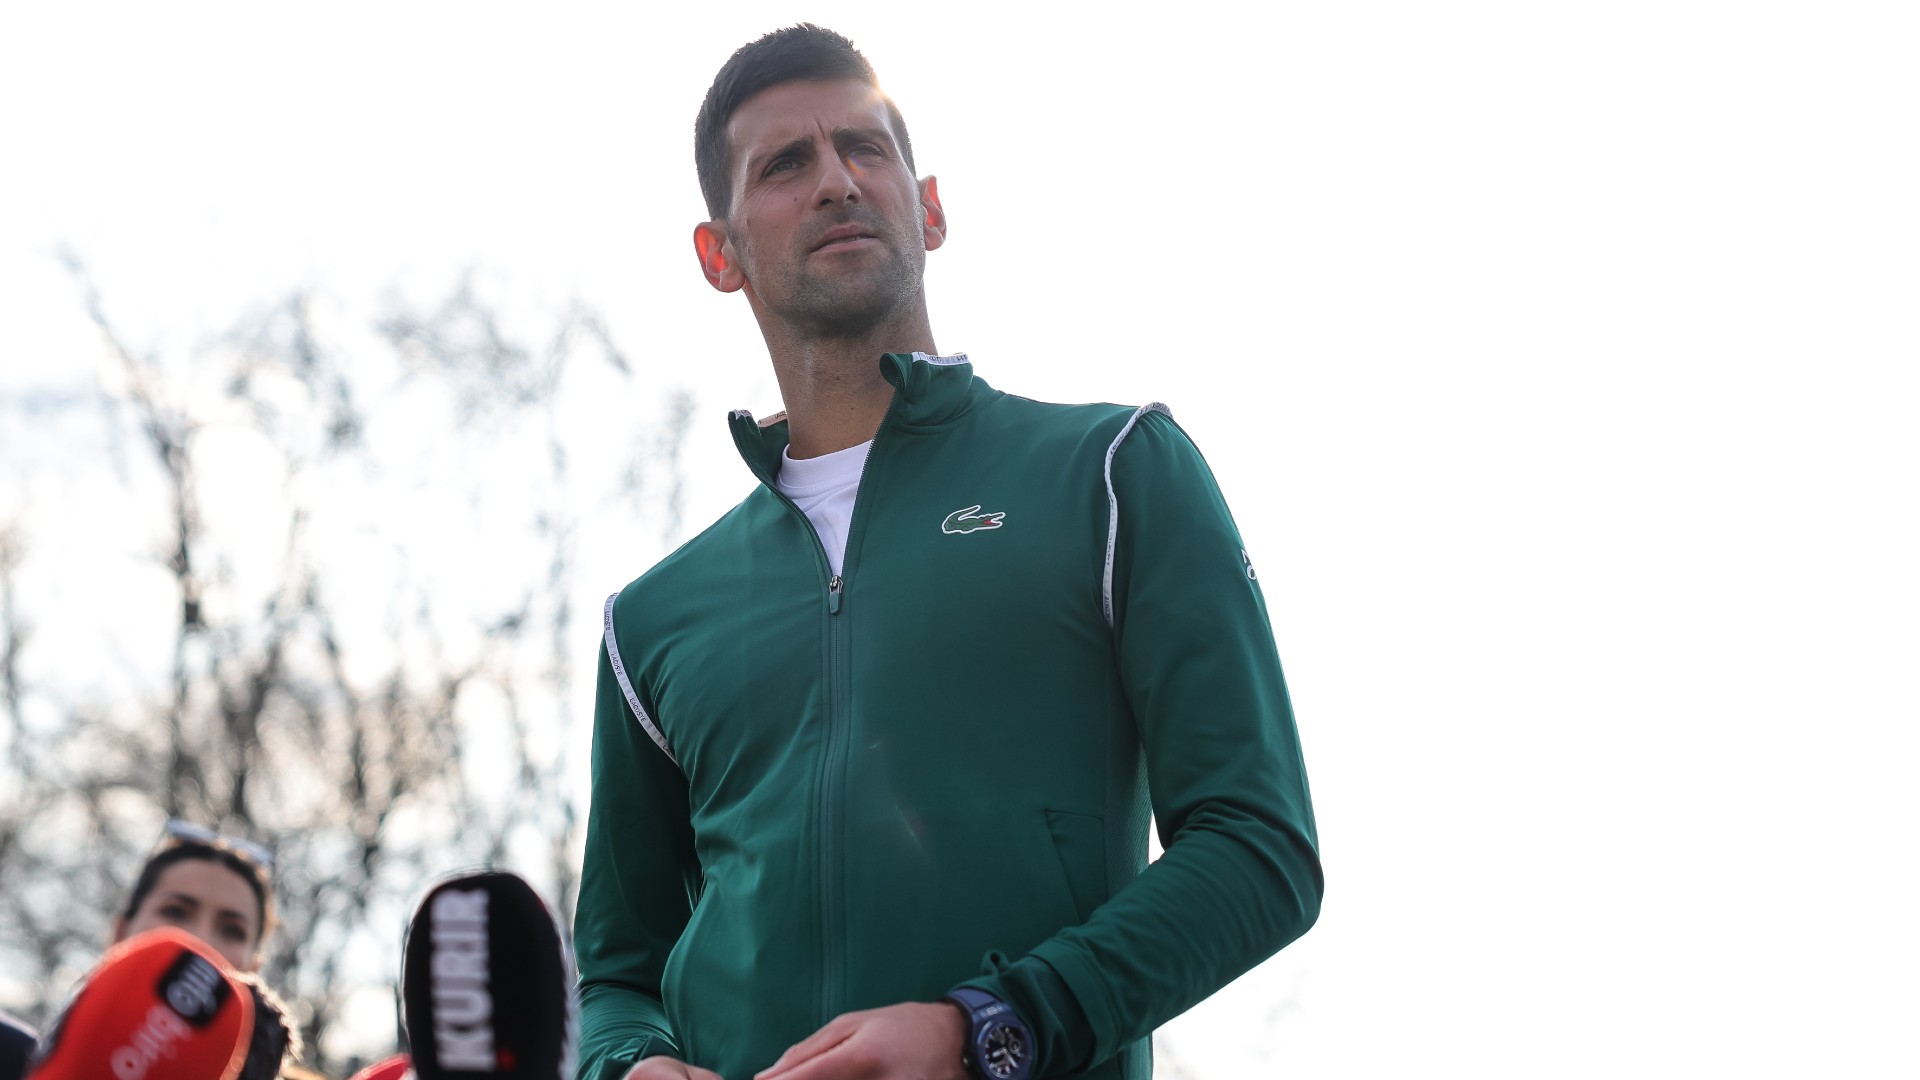 Novak Djokovic spoke to the media on Wednesday